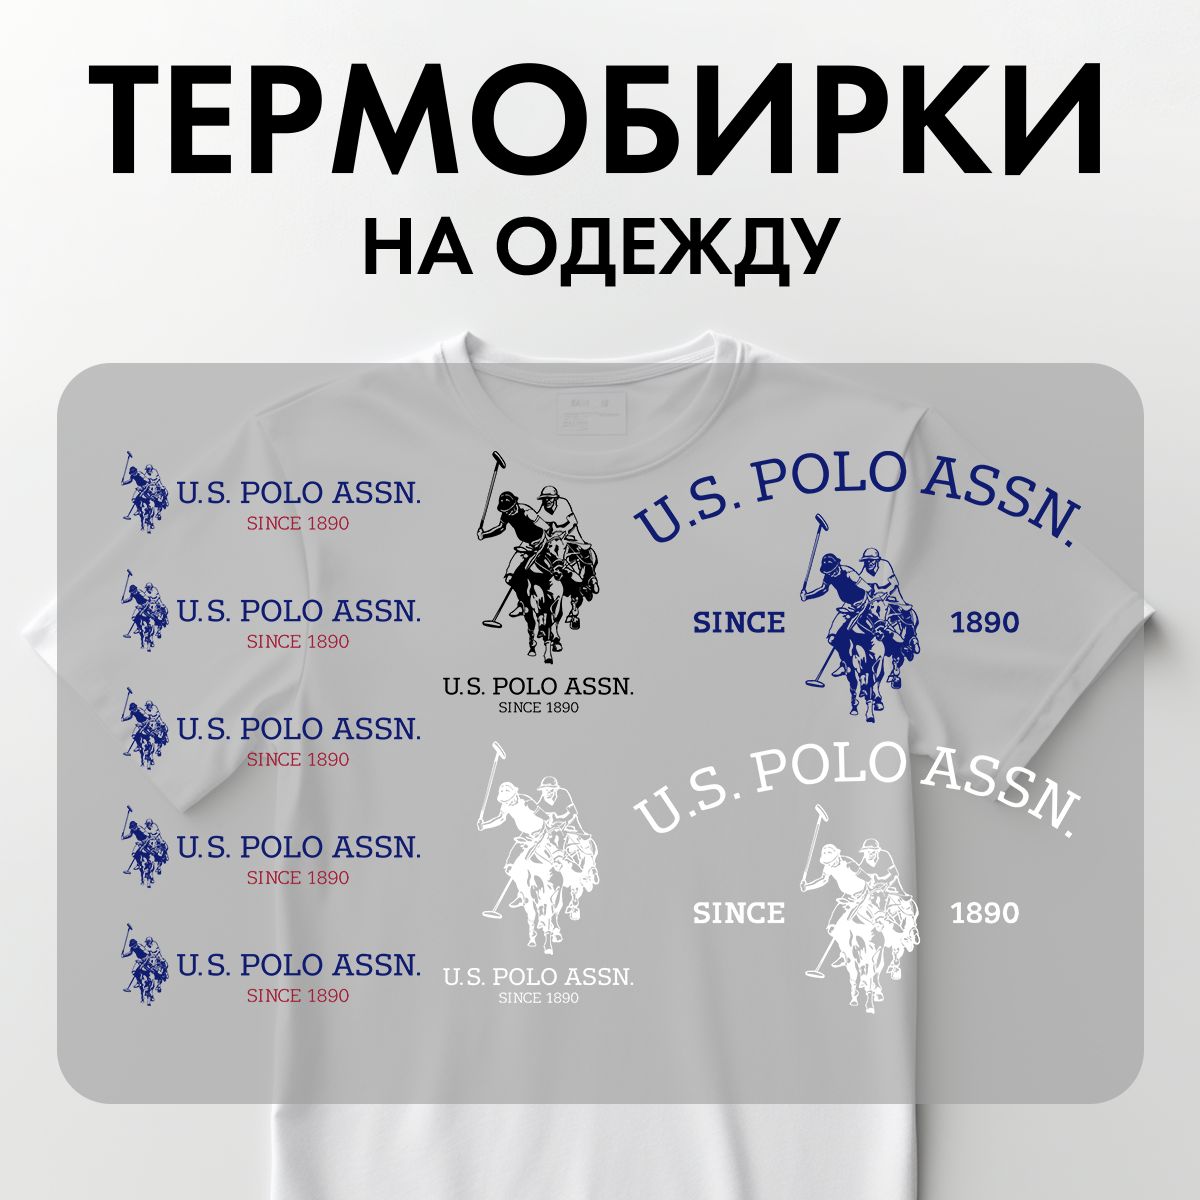 Термонаклейки Rekoy TB-LOGO USP на одежду, логотип, надписи